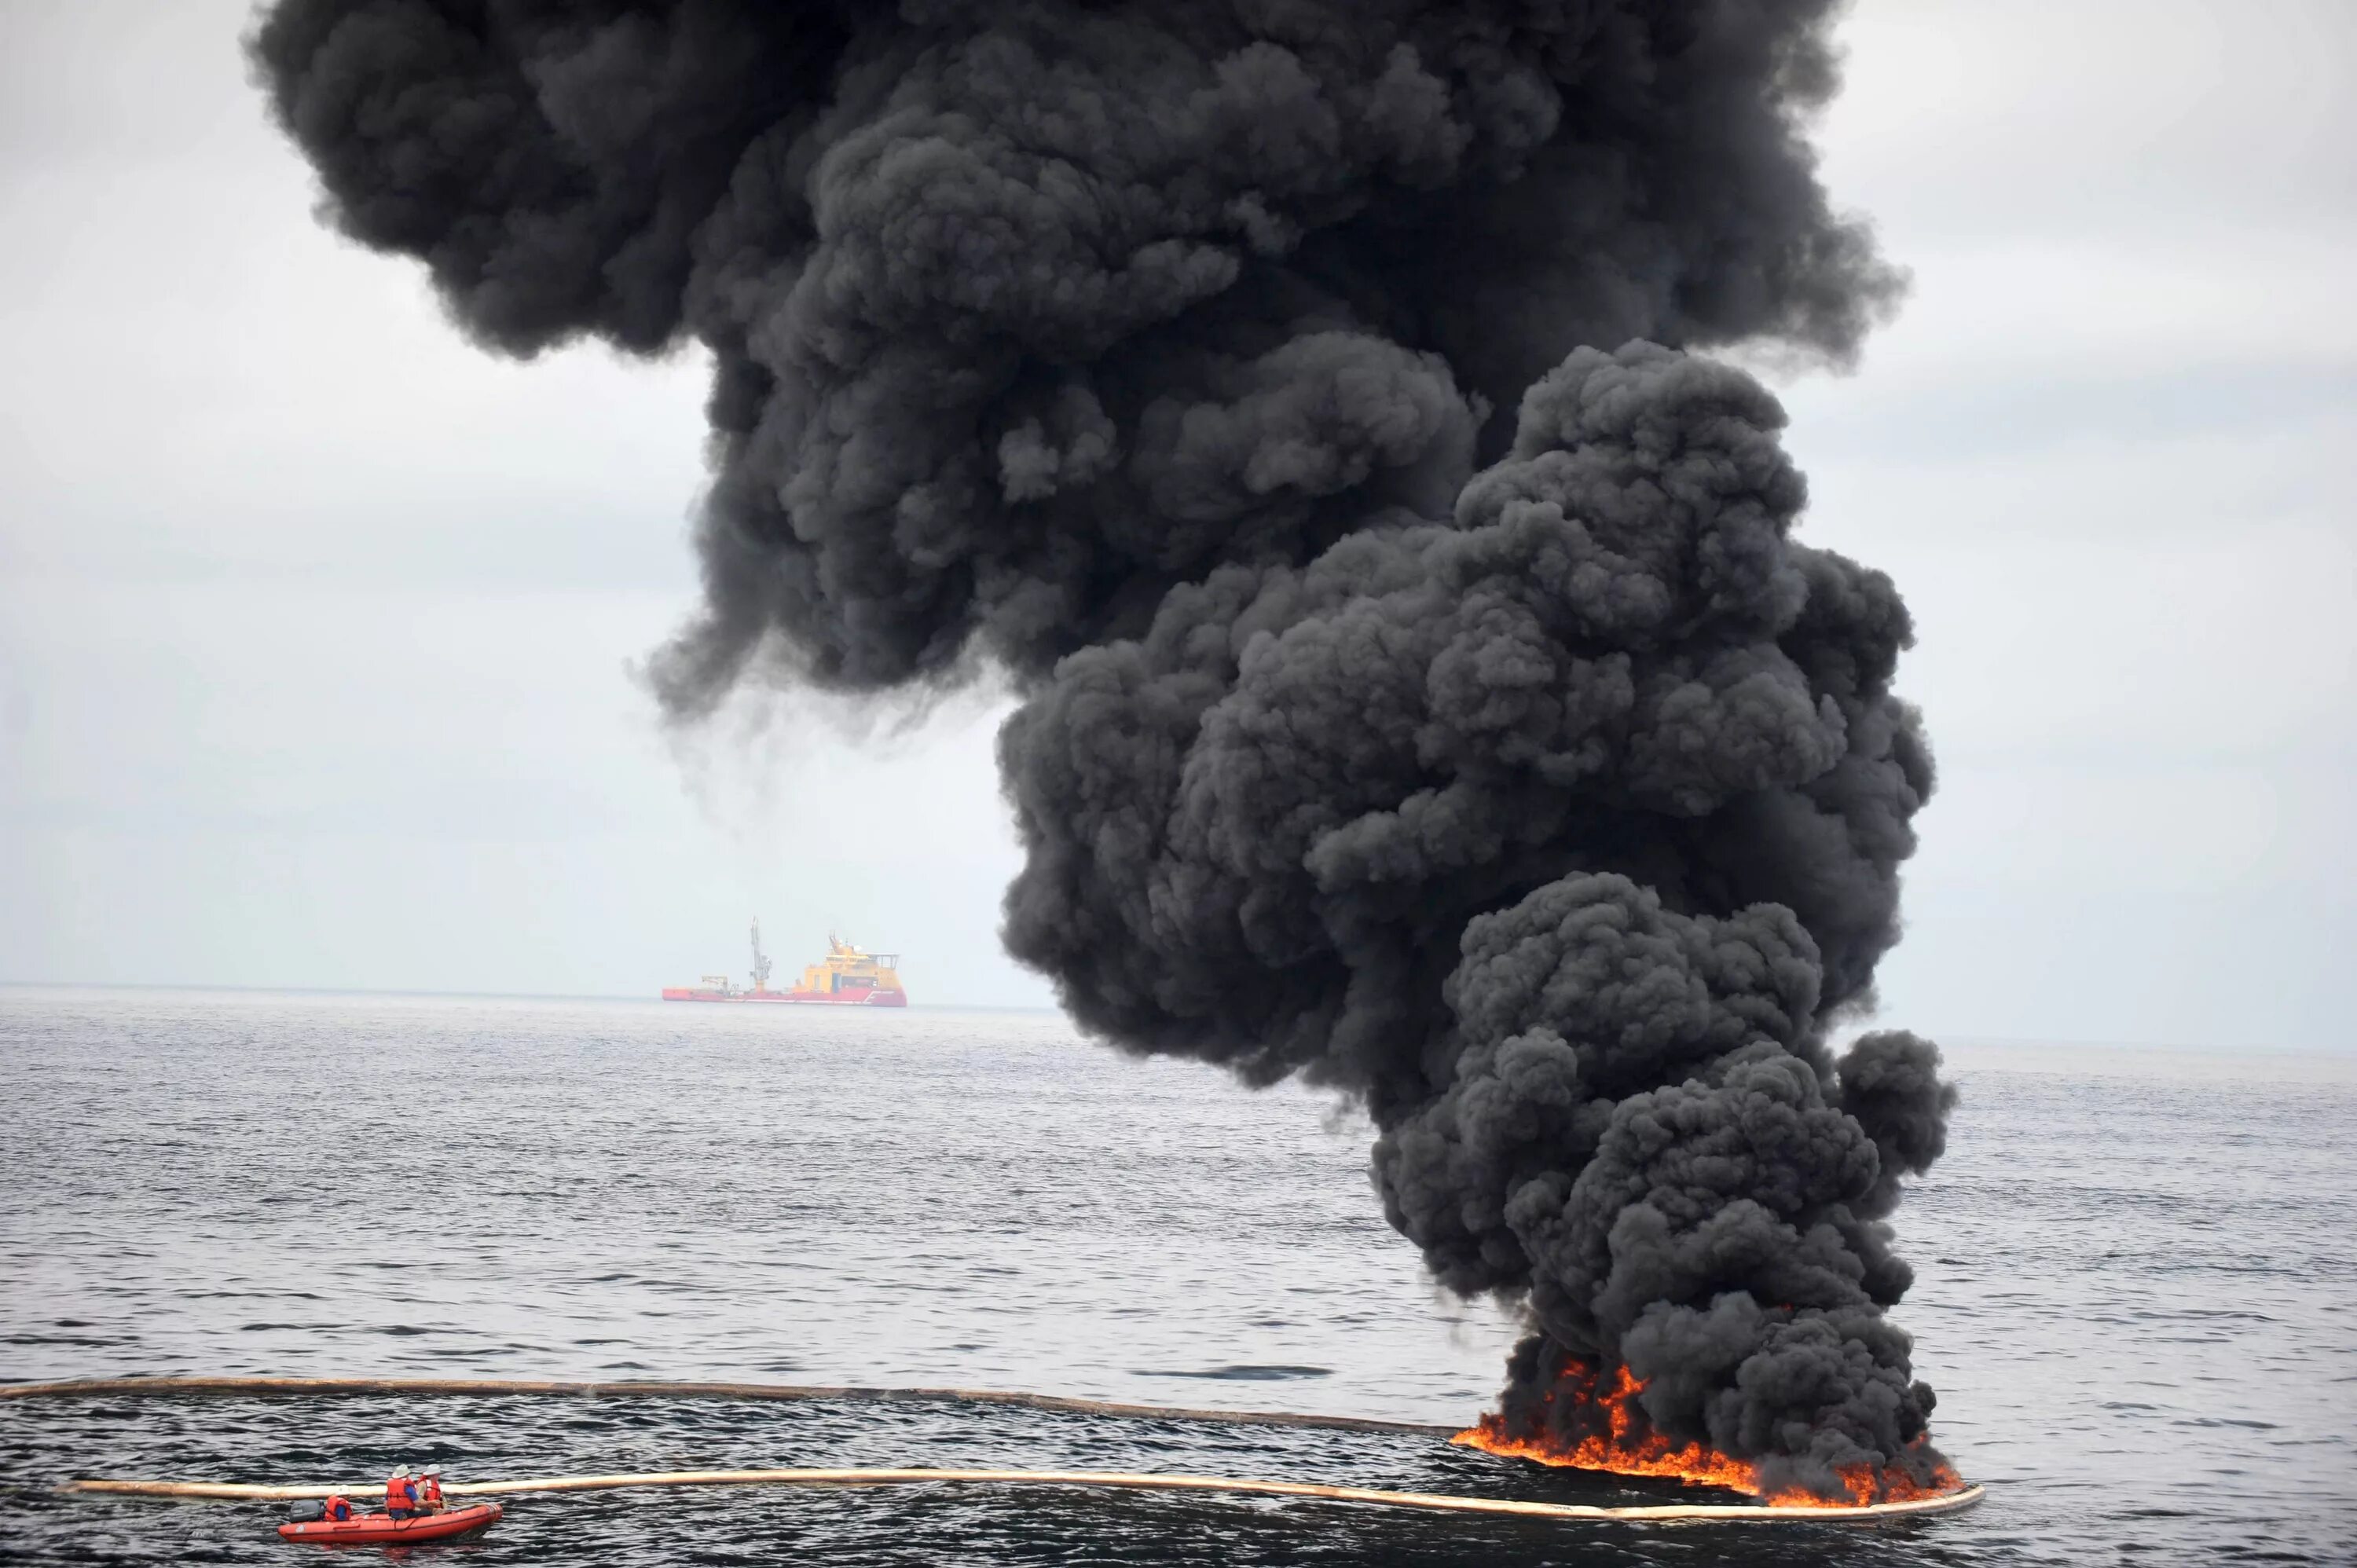 The problem starts here cars burn petrol. Deepwater Horizon разлив нефти. Разлив нефти в мексиканском заливе 2010. Взрыв нефтяной платформы Deepwater Horizon. Нефтяная катастрофа в мексиканском заливе 2010.